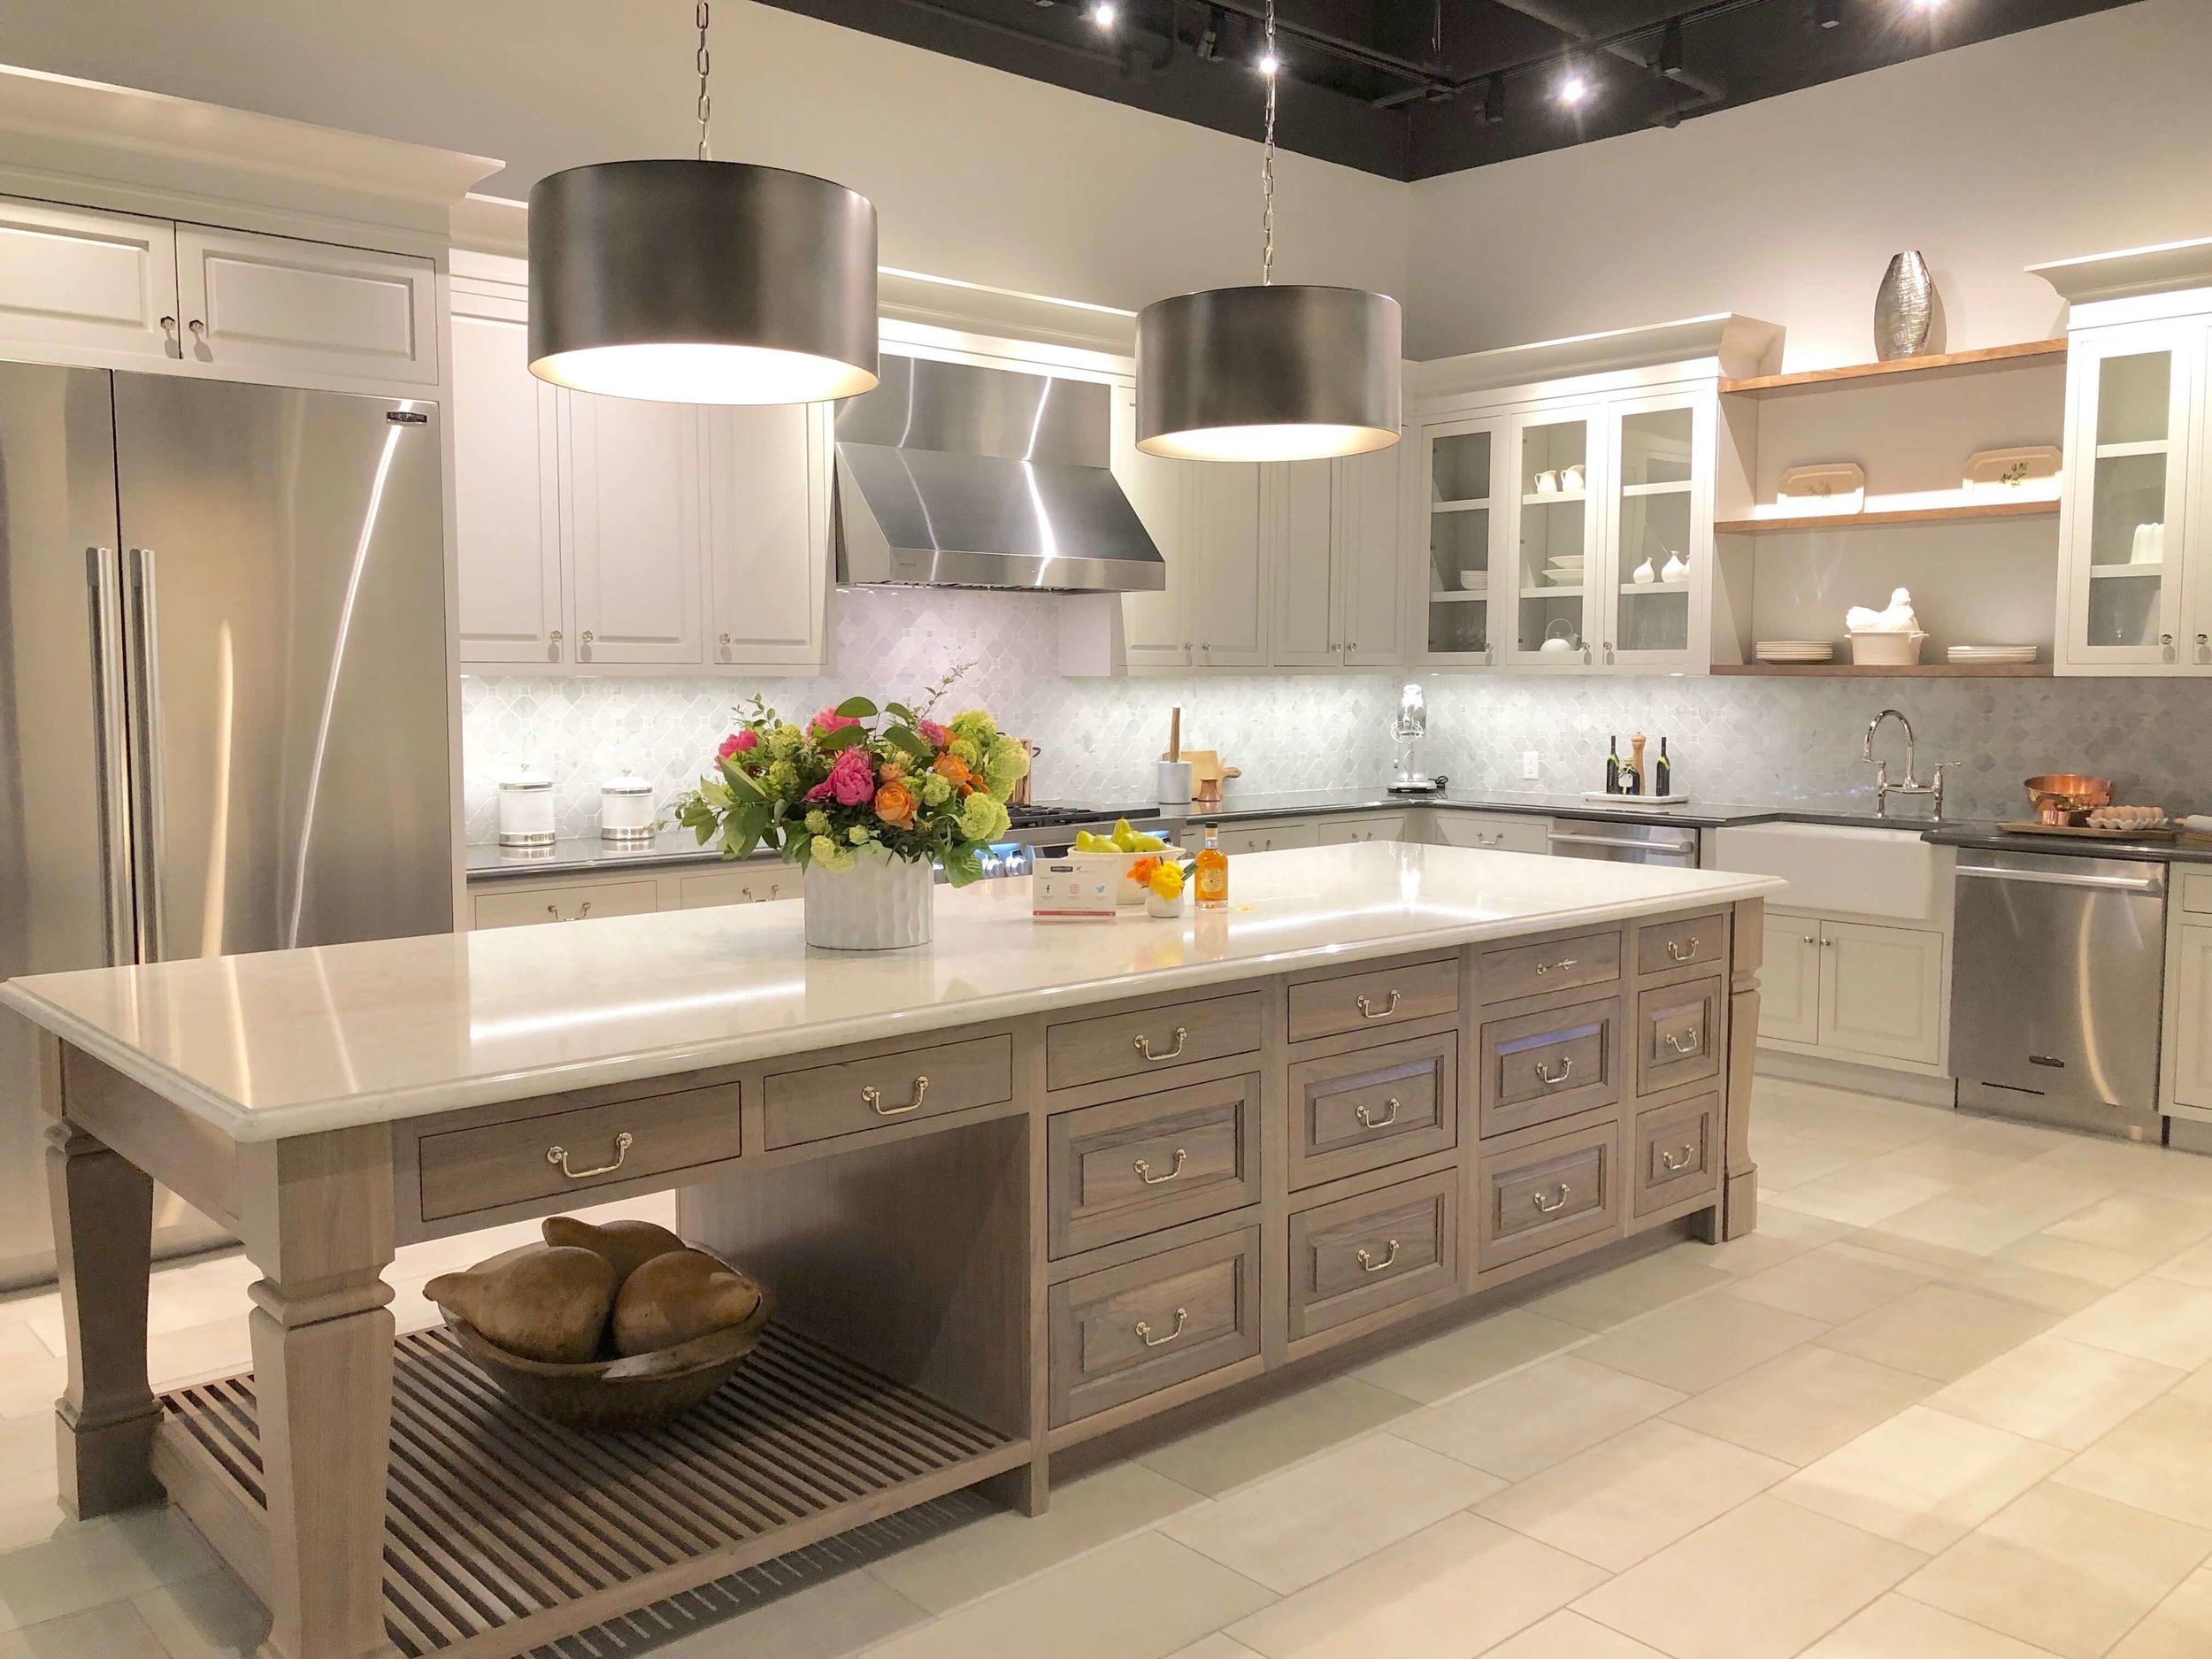 signature kitchen and design